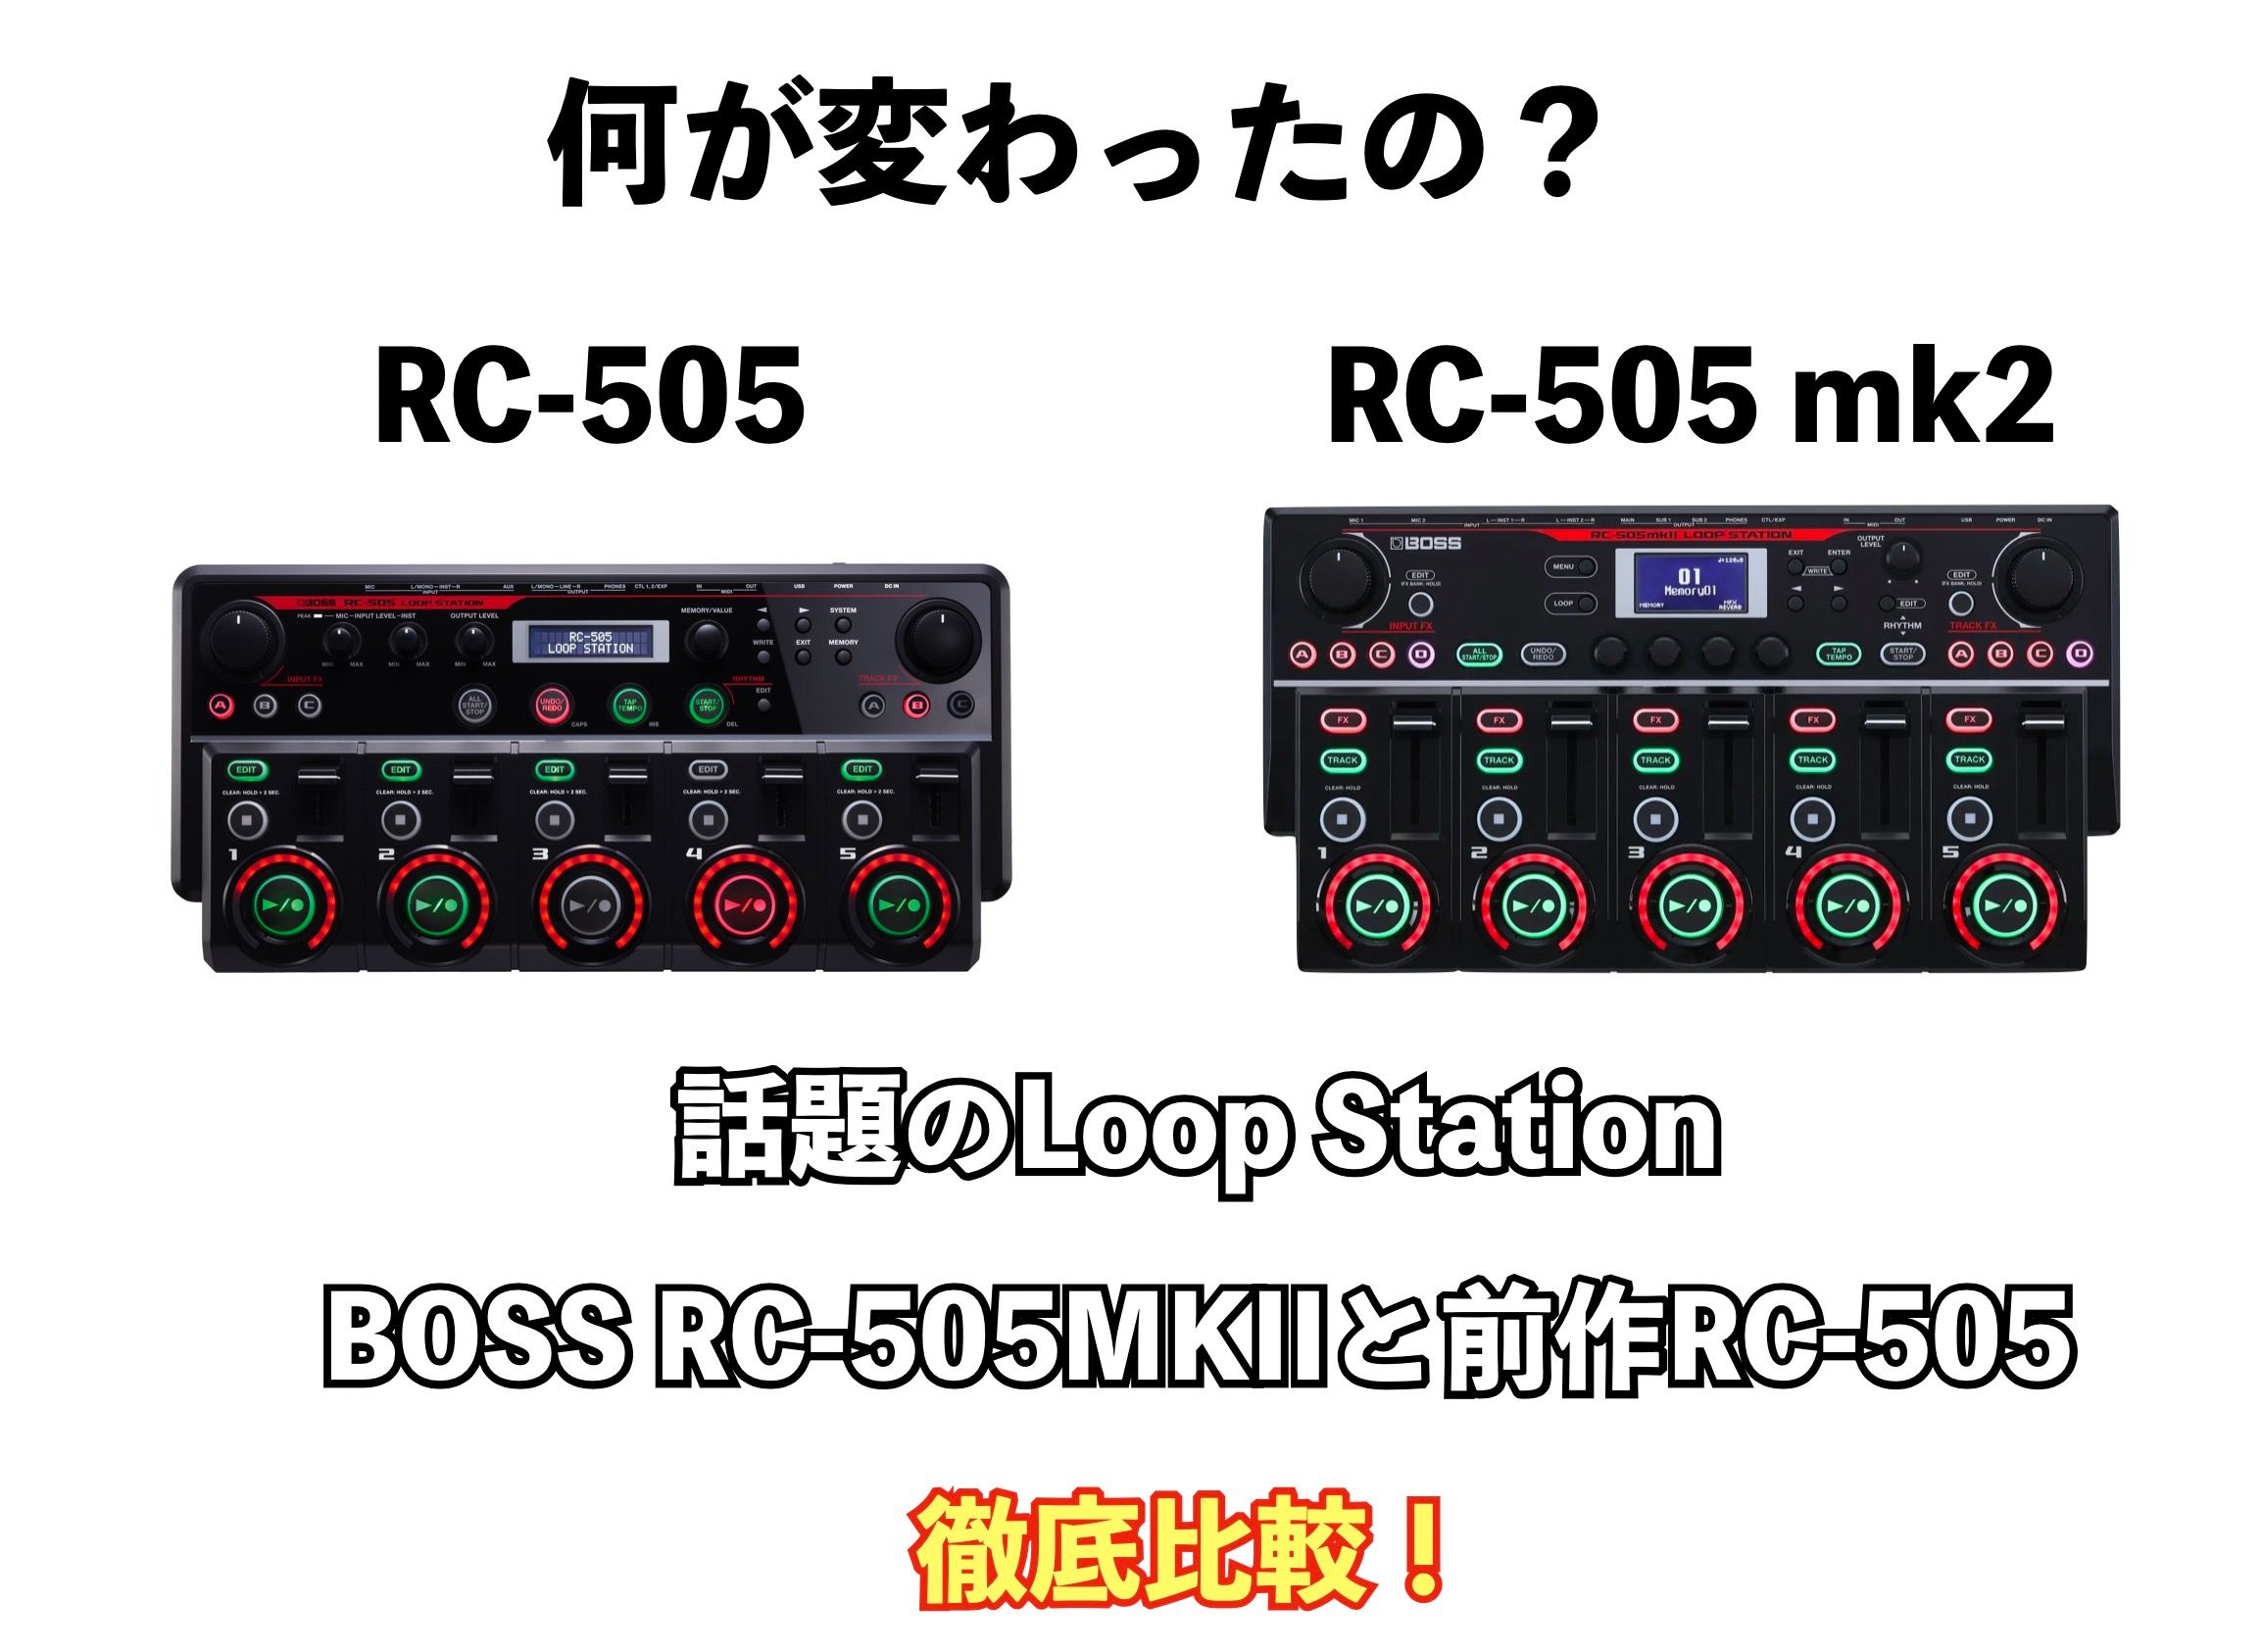 BOSS ボス RC-505mkII loopstation mk2-